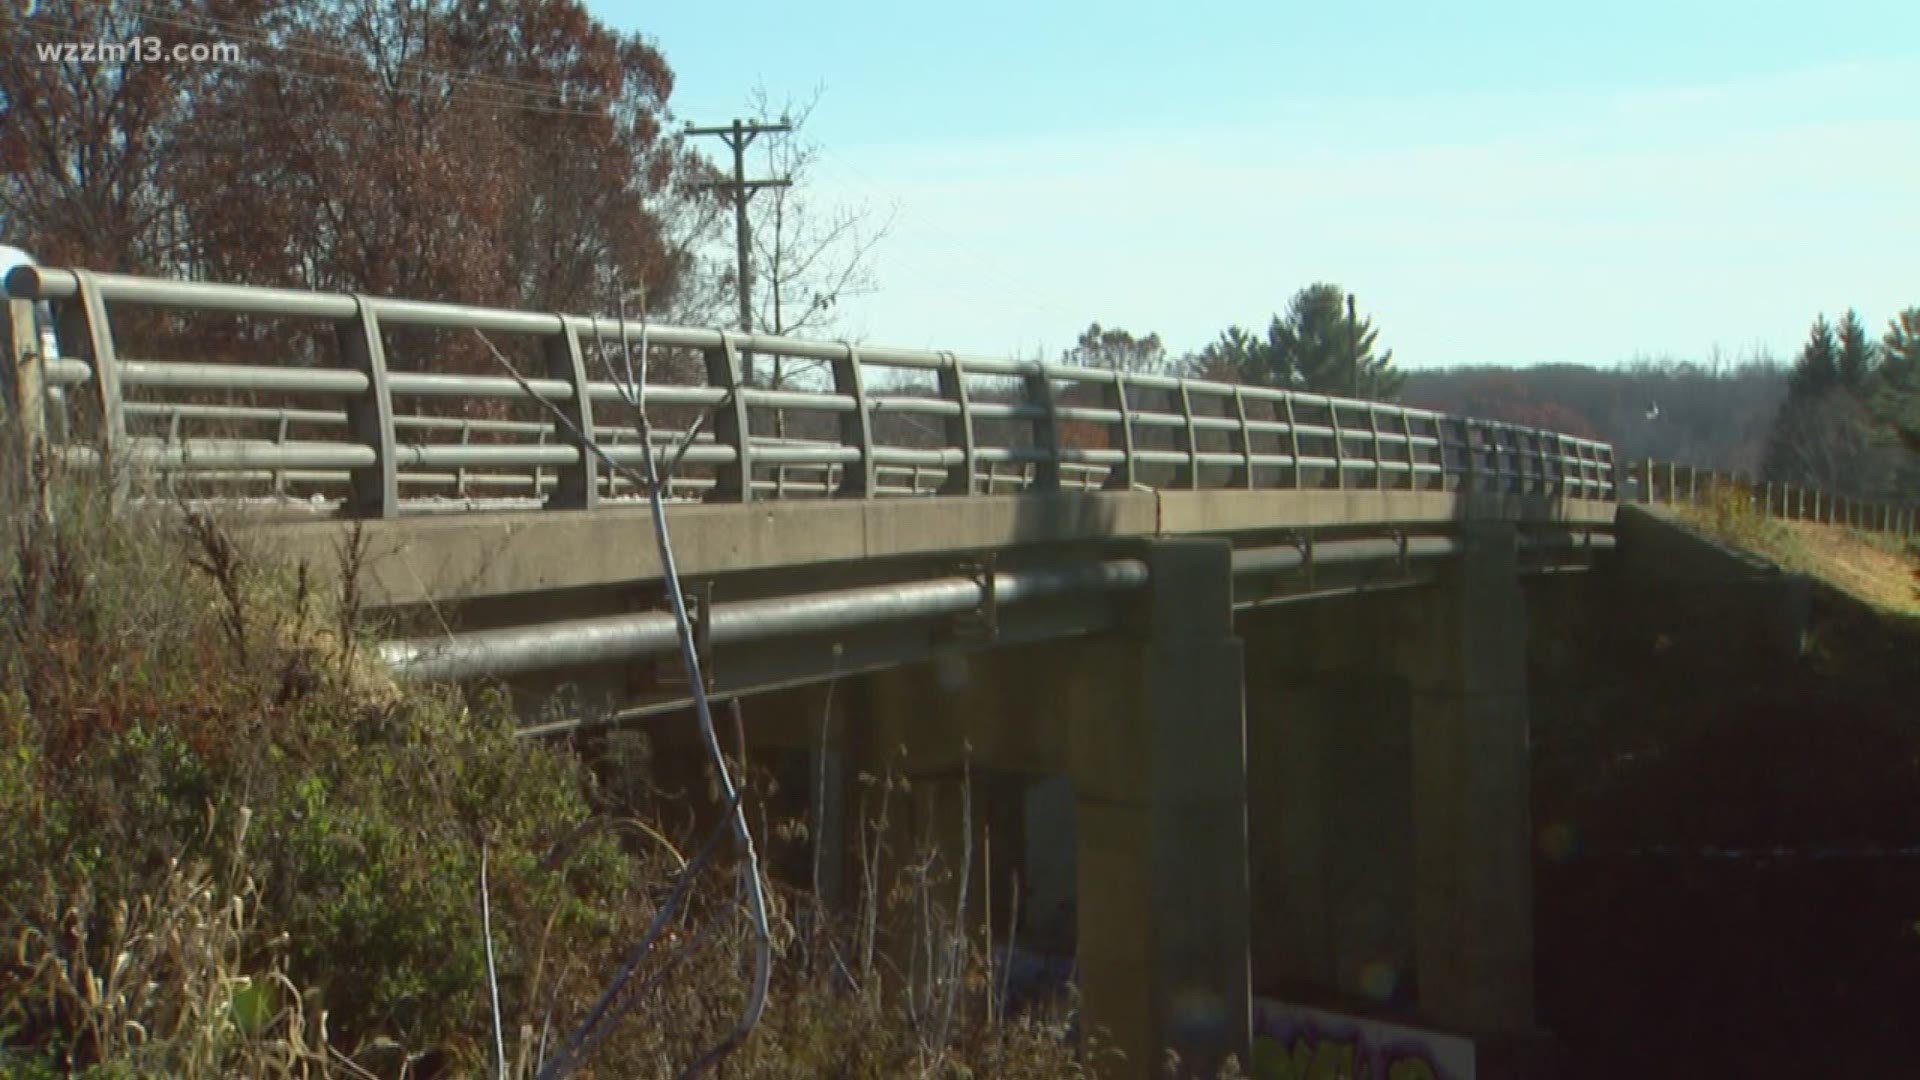 Walker bridge being replaced with railroad crossing